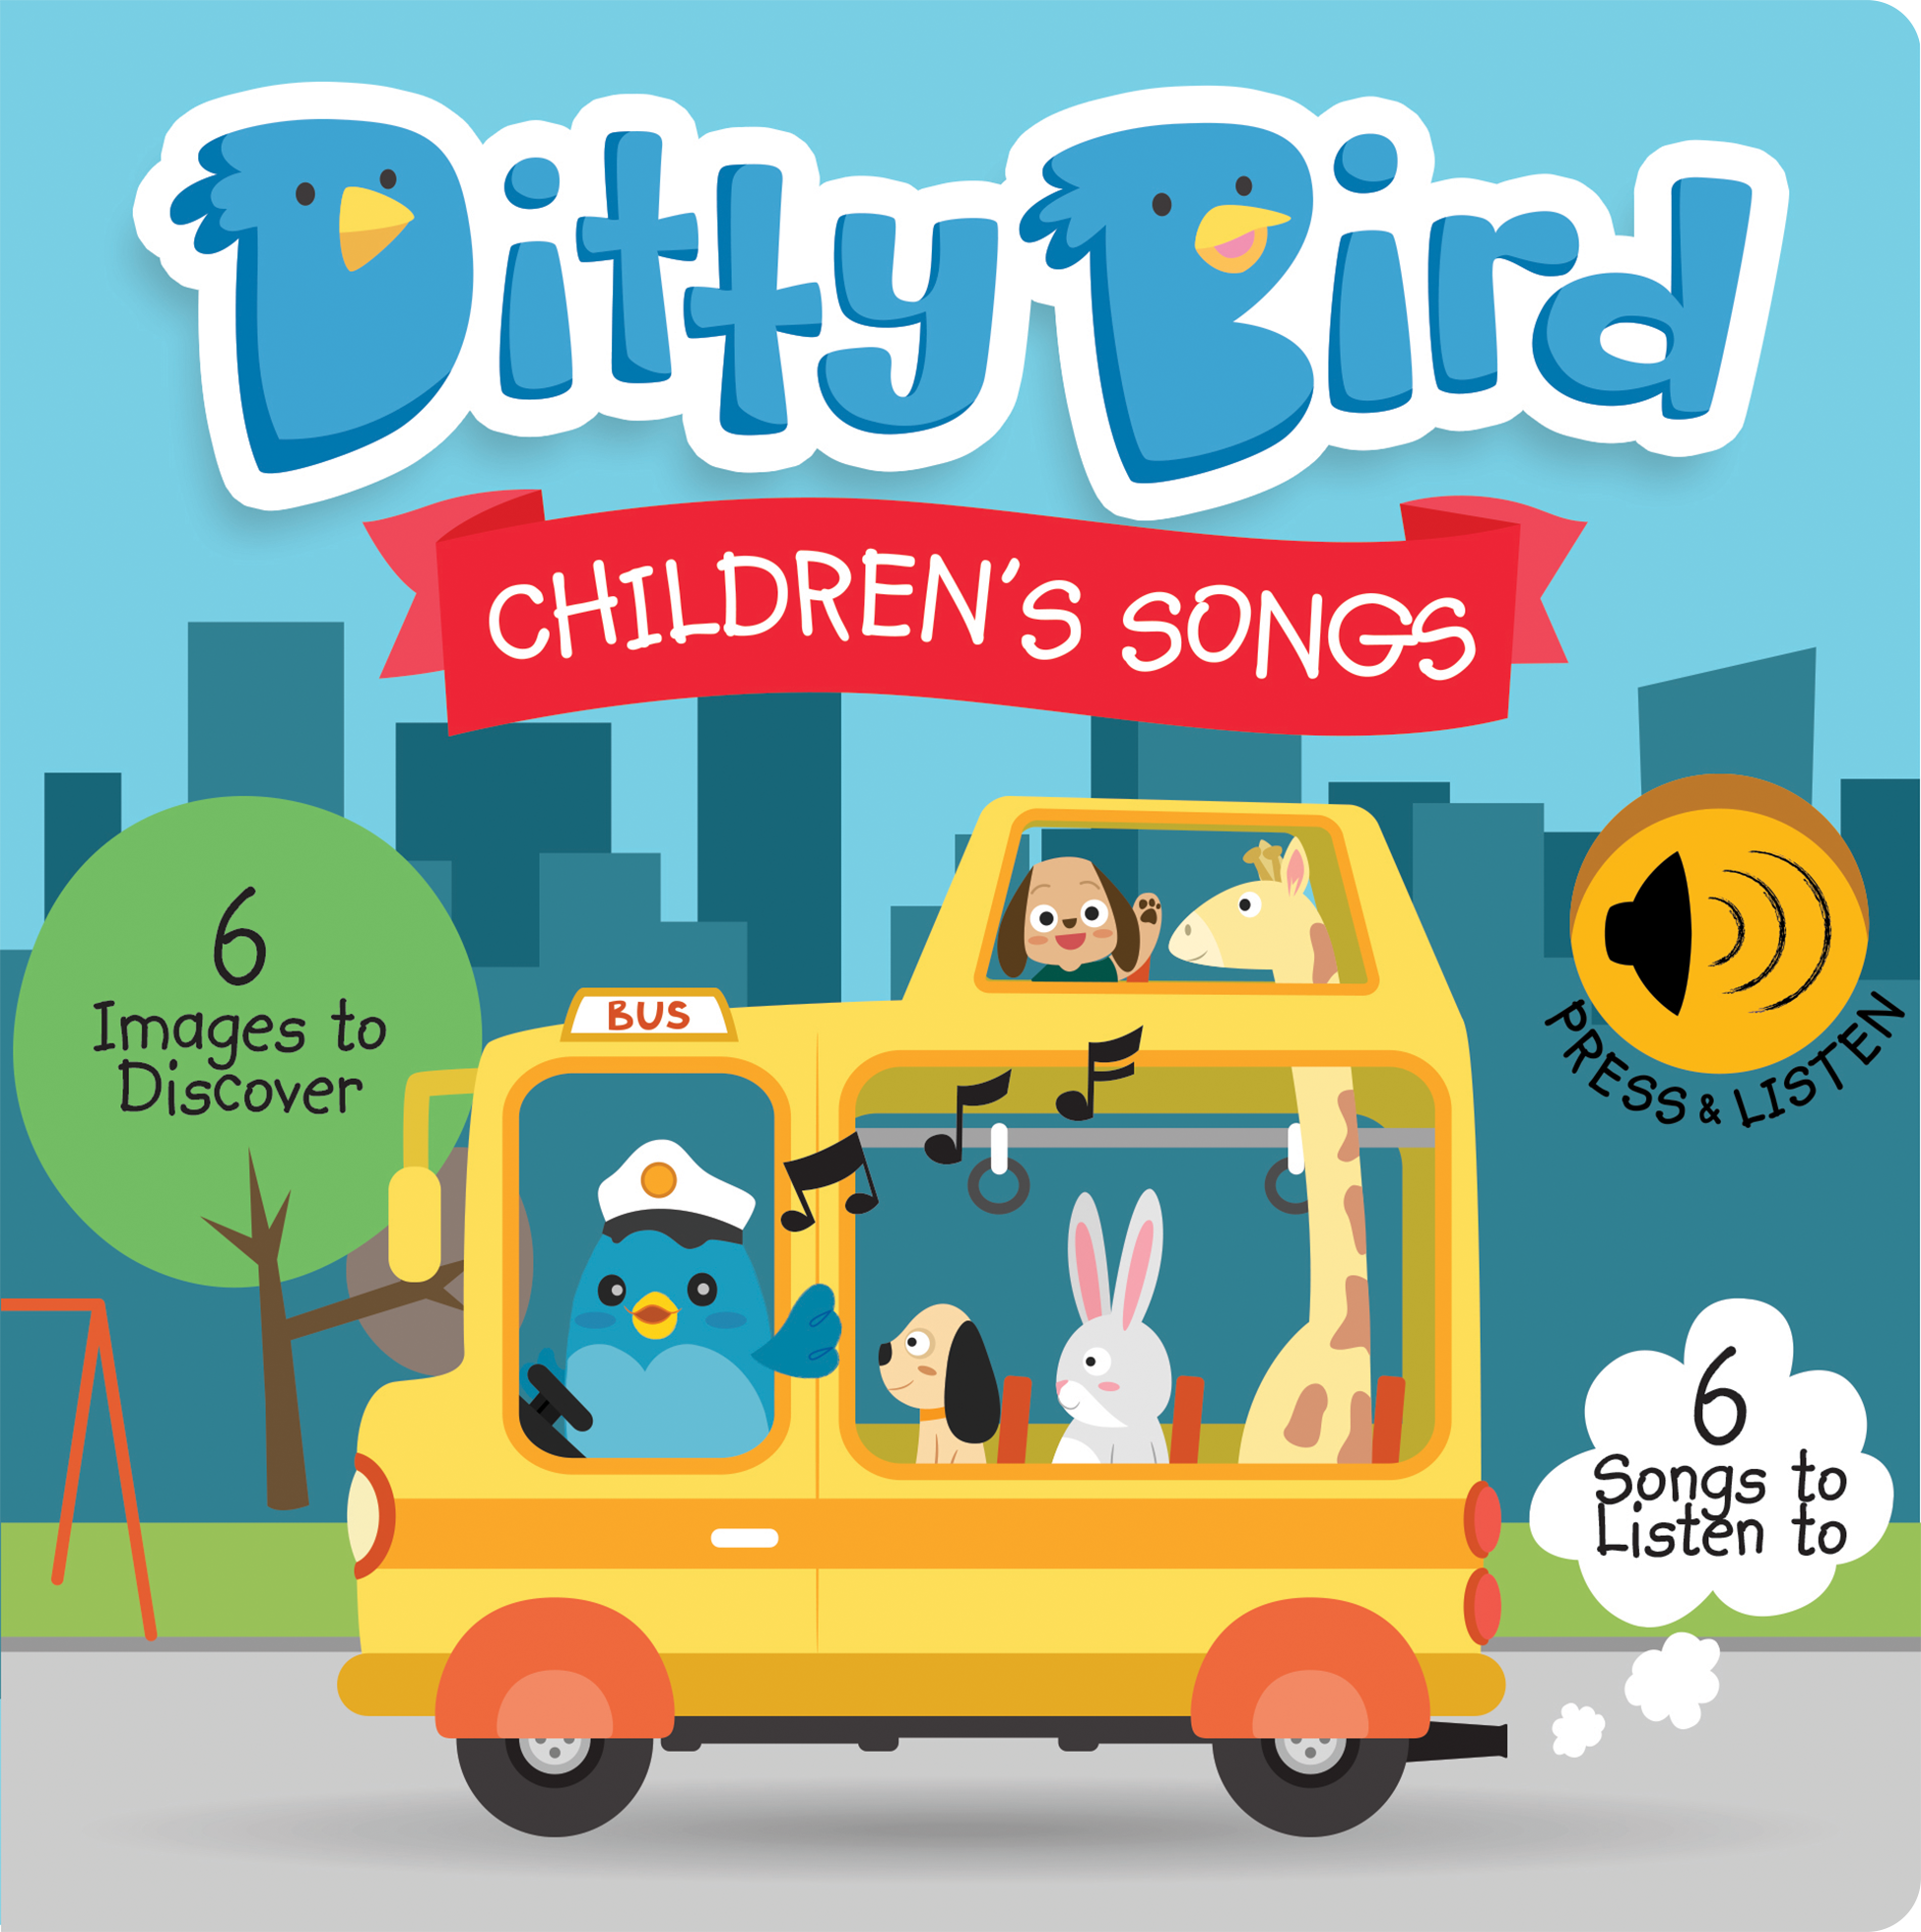 Children’s Songs by Ditty Bird